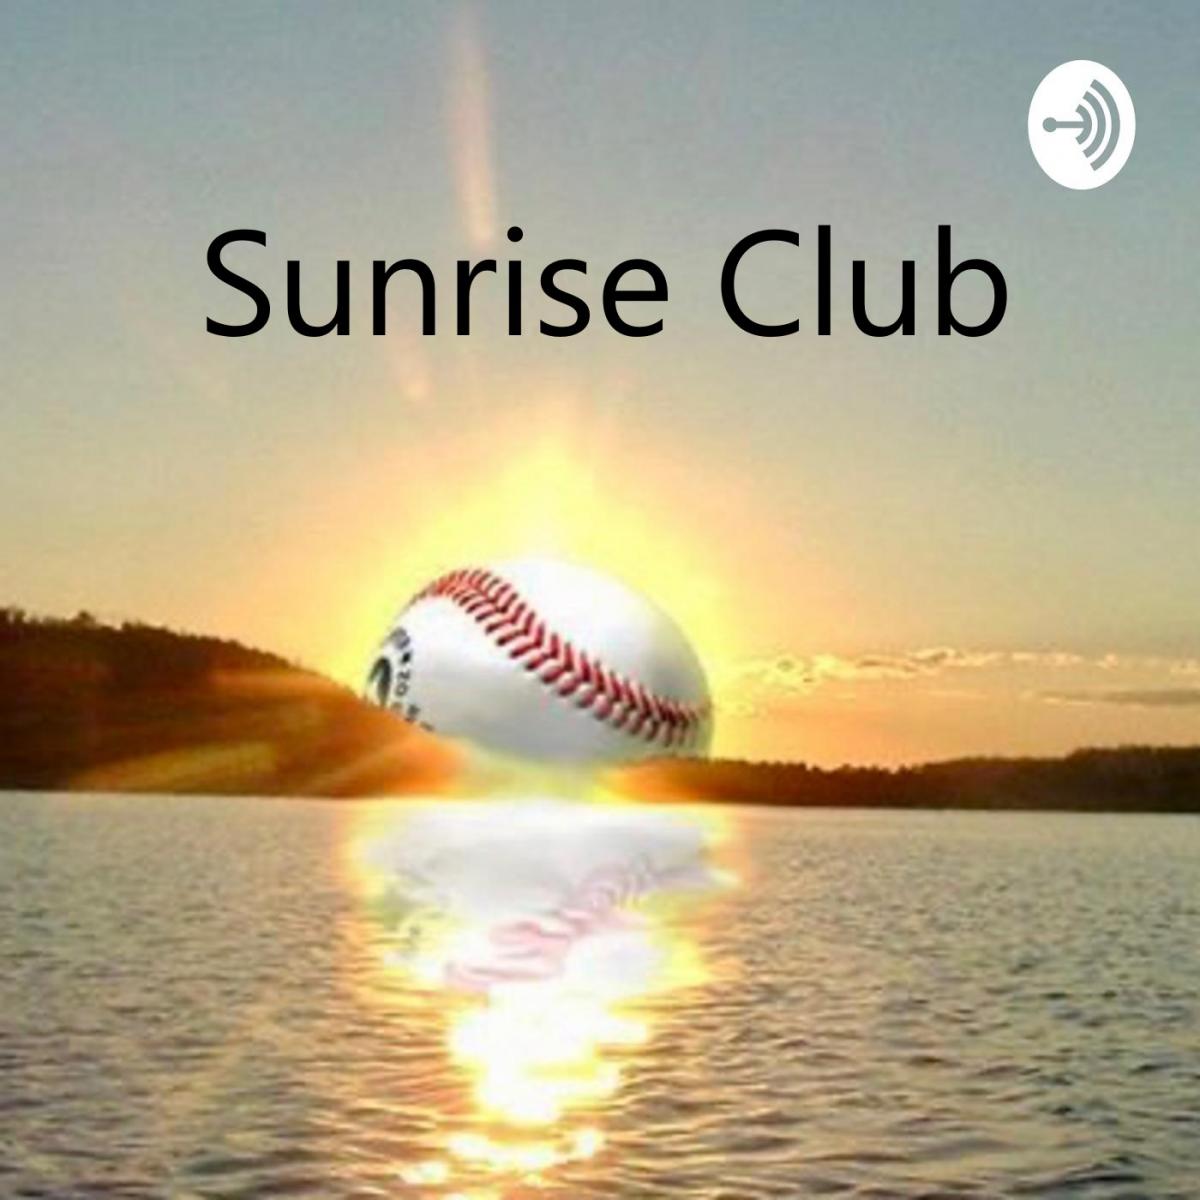 Sunrise Club